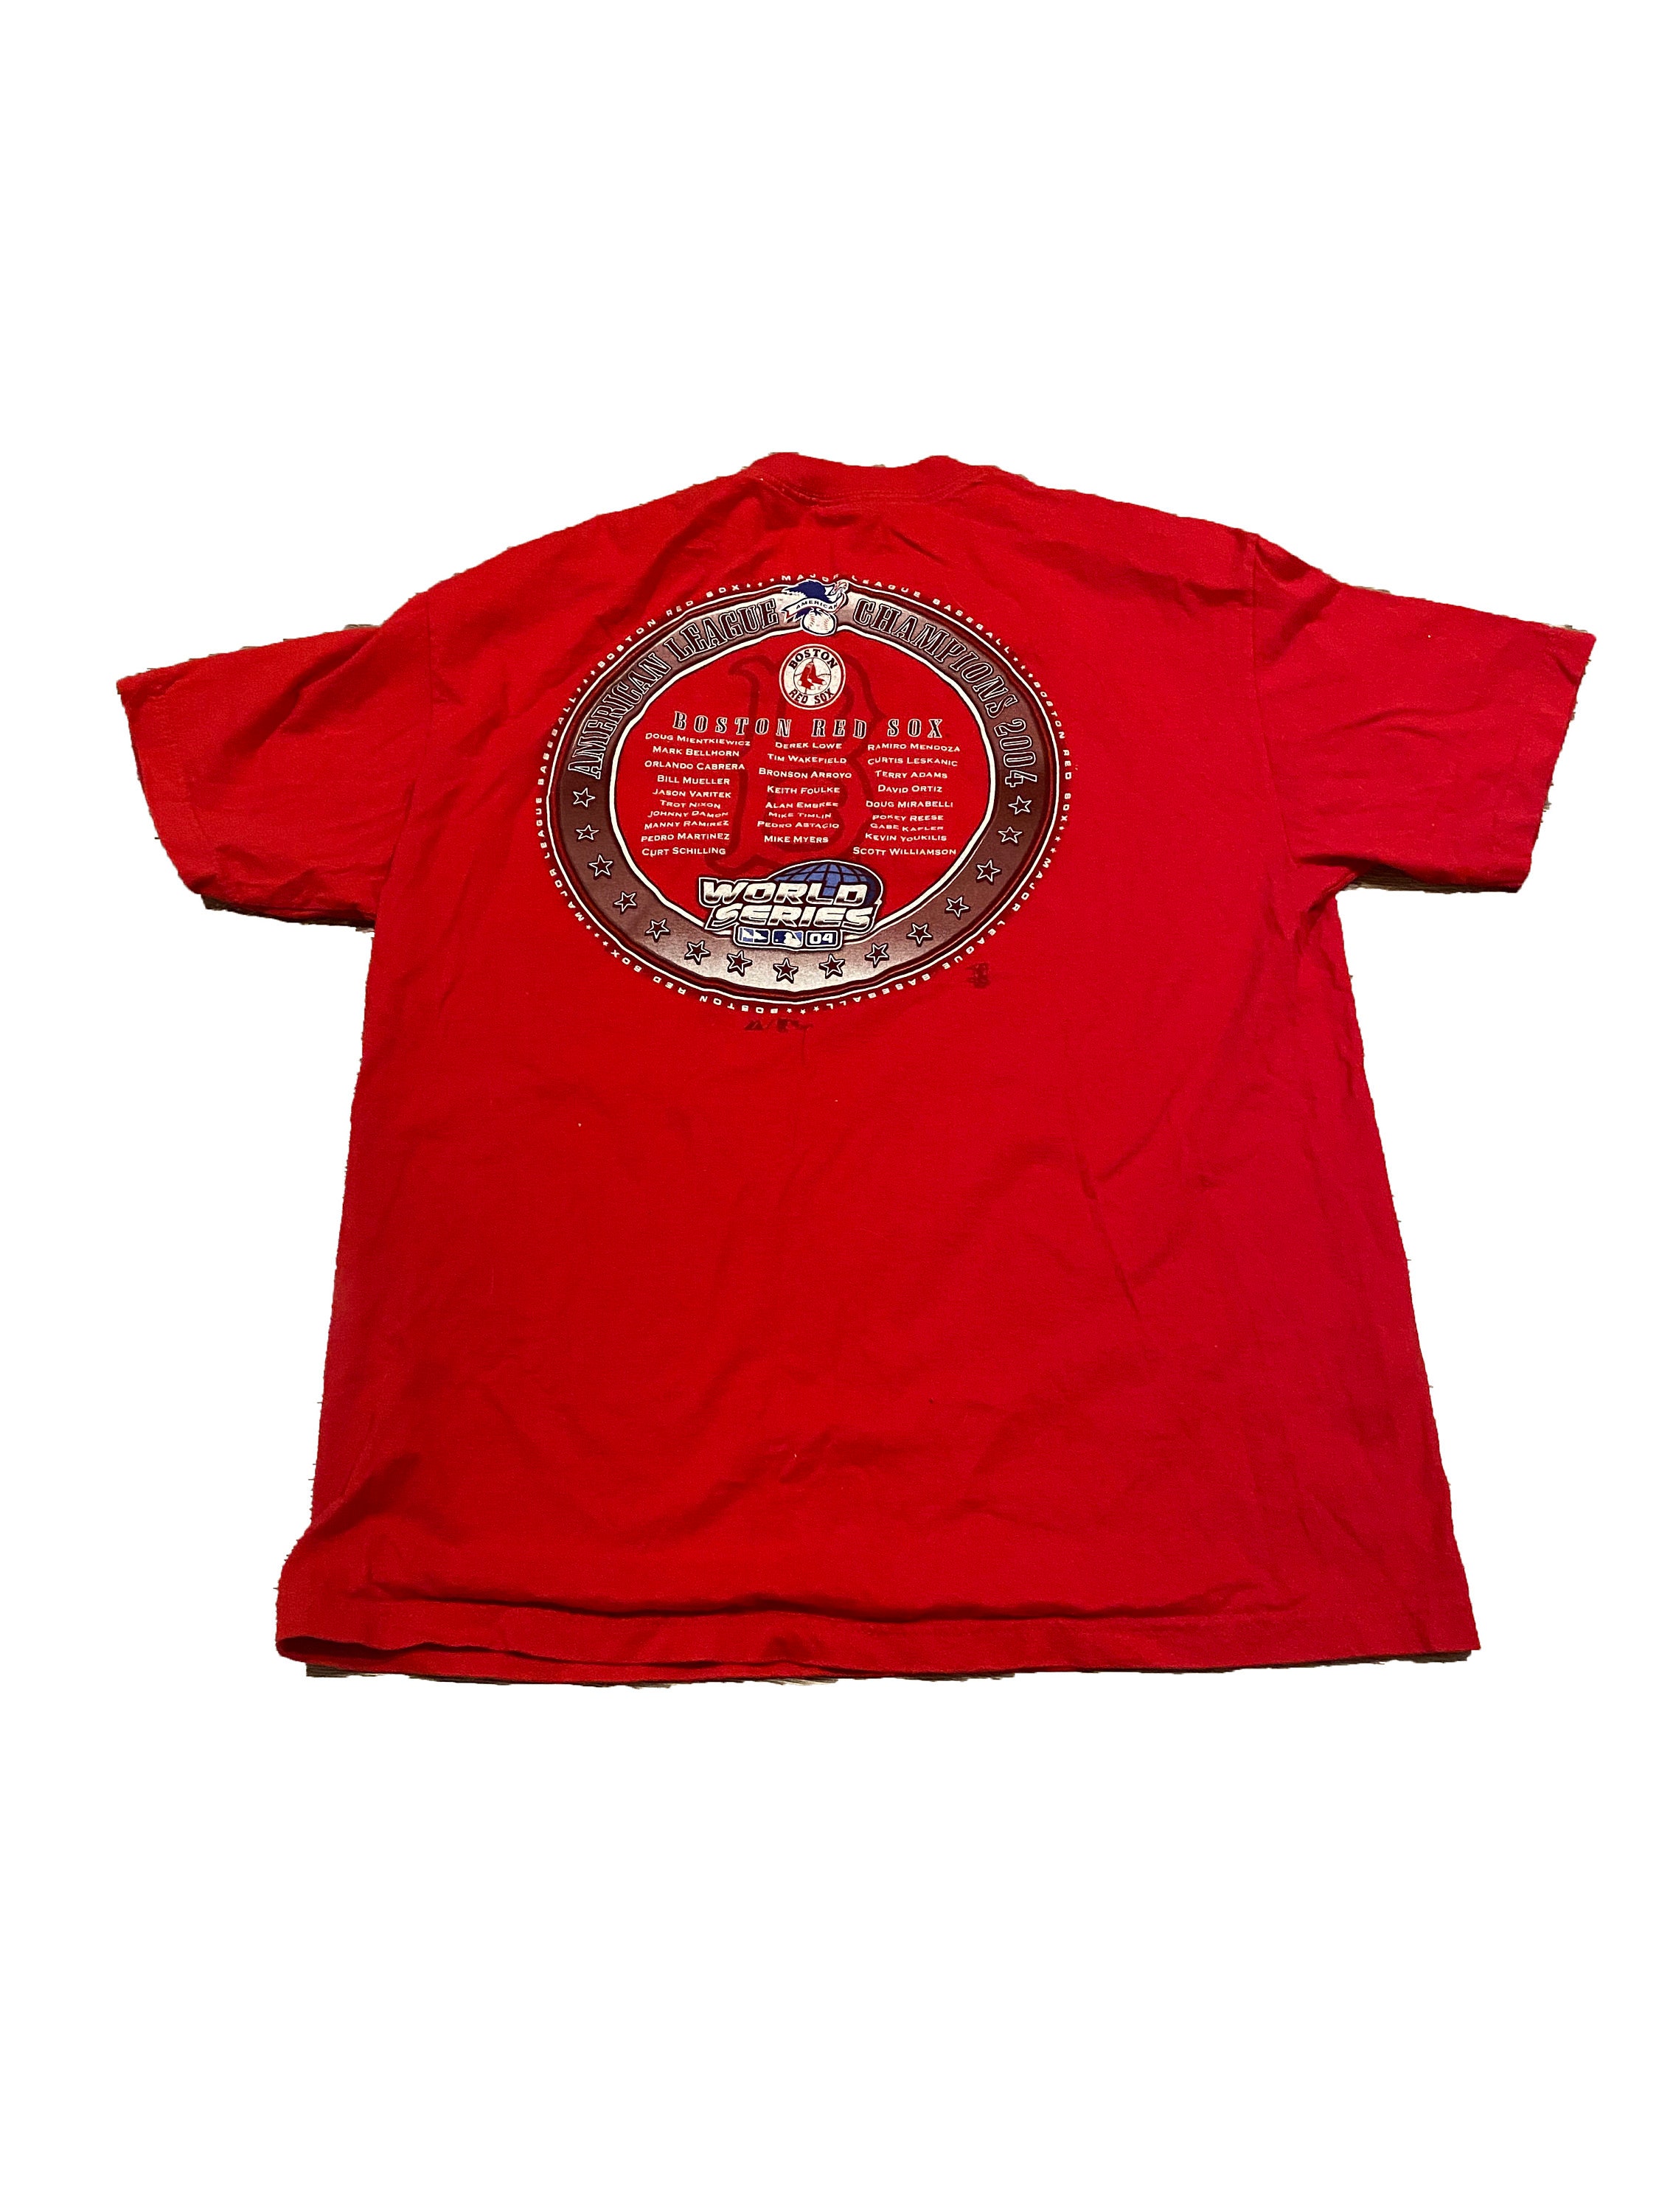 Boston Red Sox Shirt / Vintage / MLB Baseball / Manny Ramirez